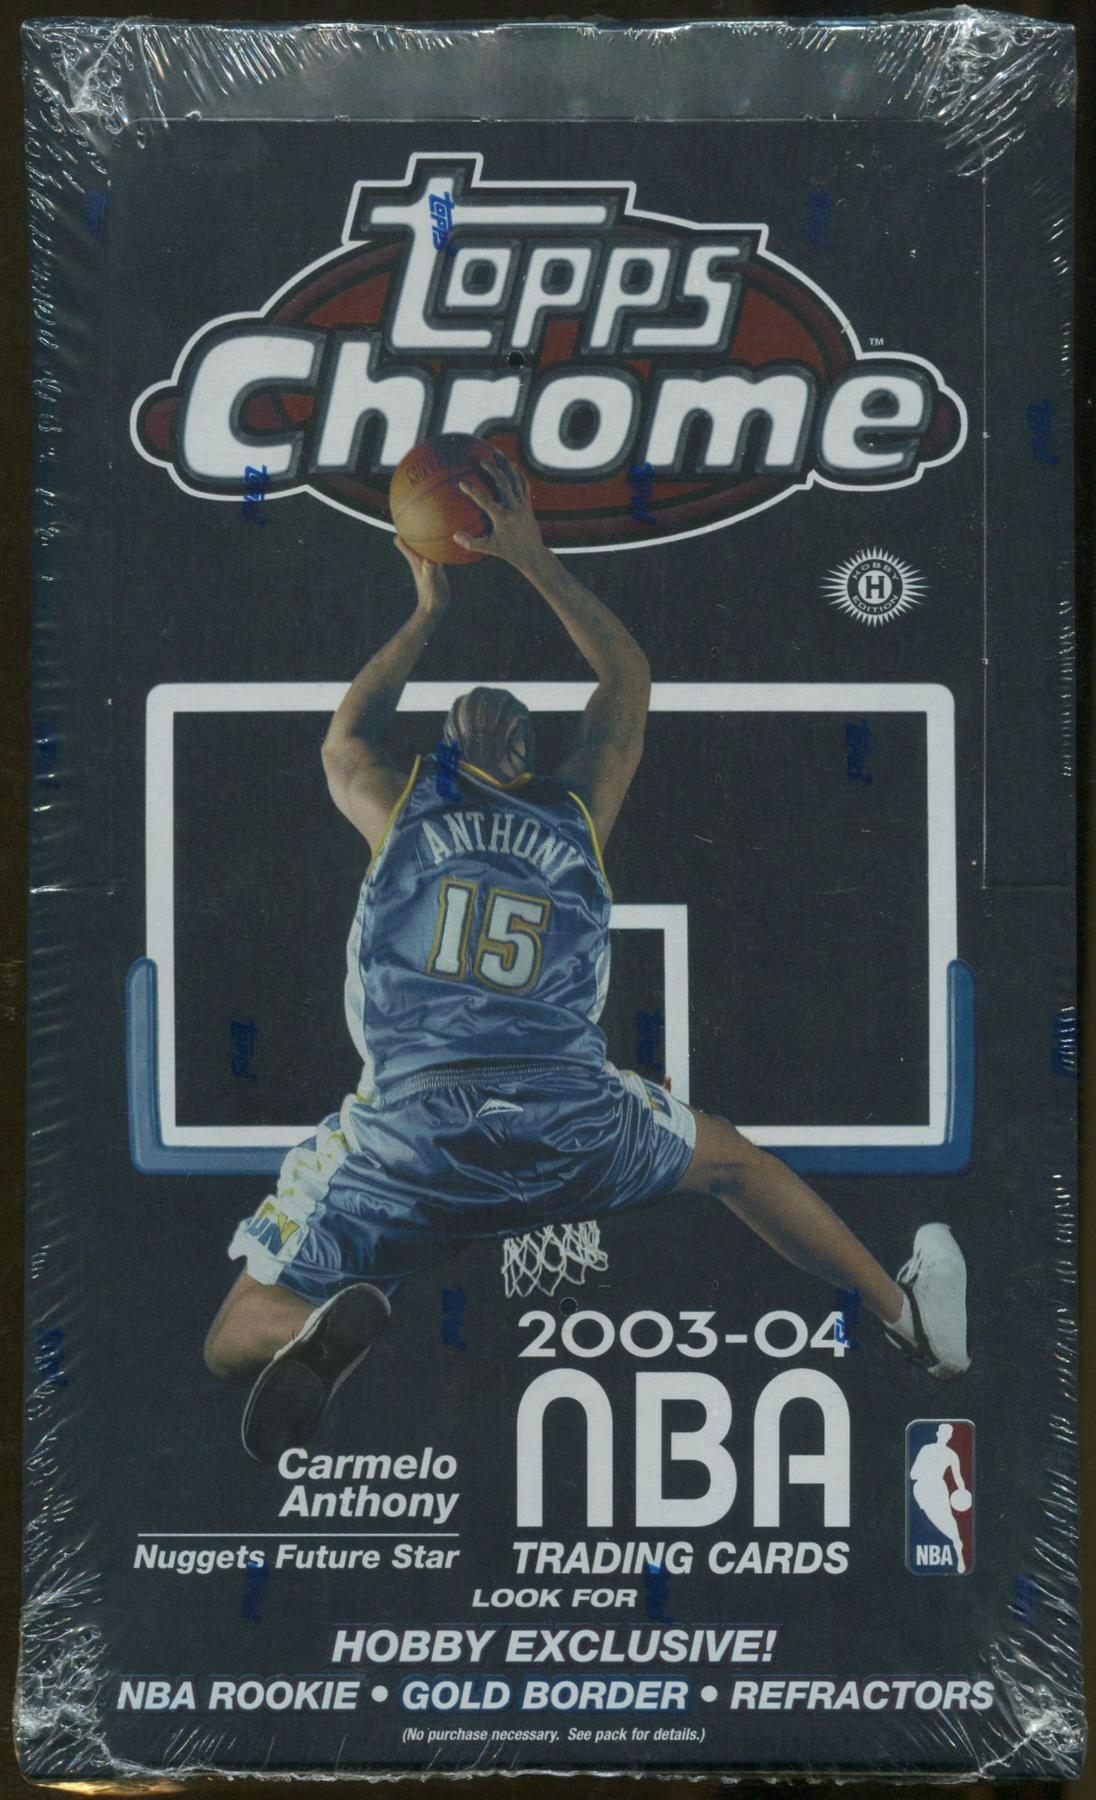 Chris Bosh - Autographed 2003 Topps Chrome Rookie Card - Sports